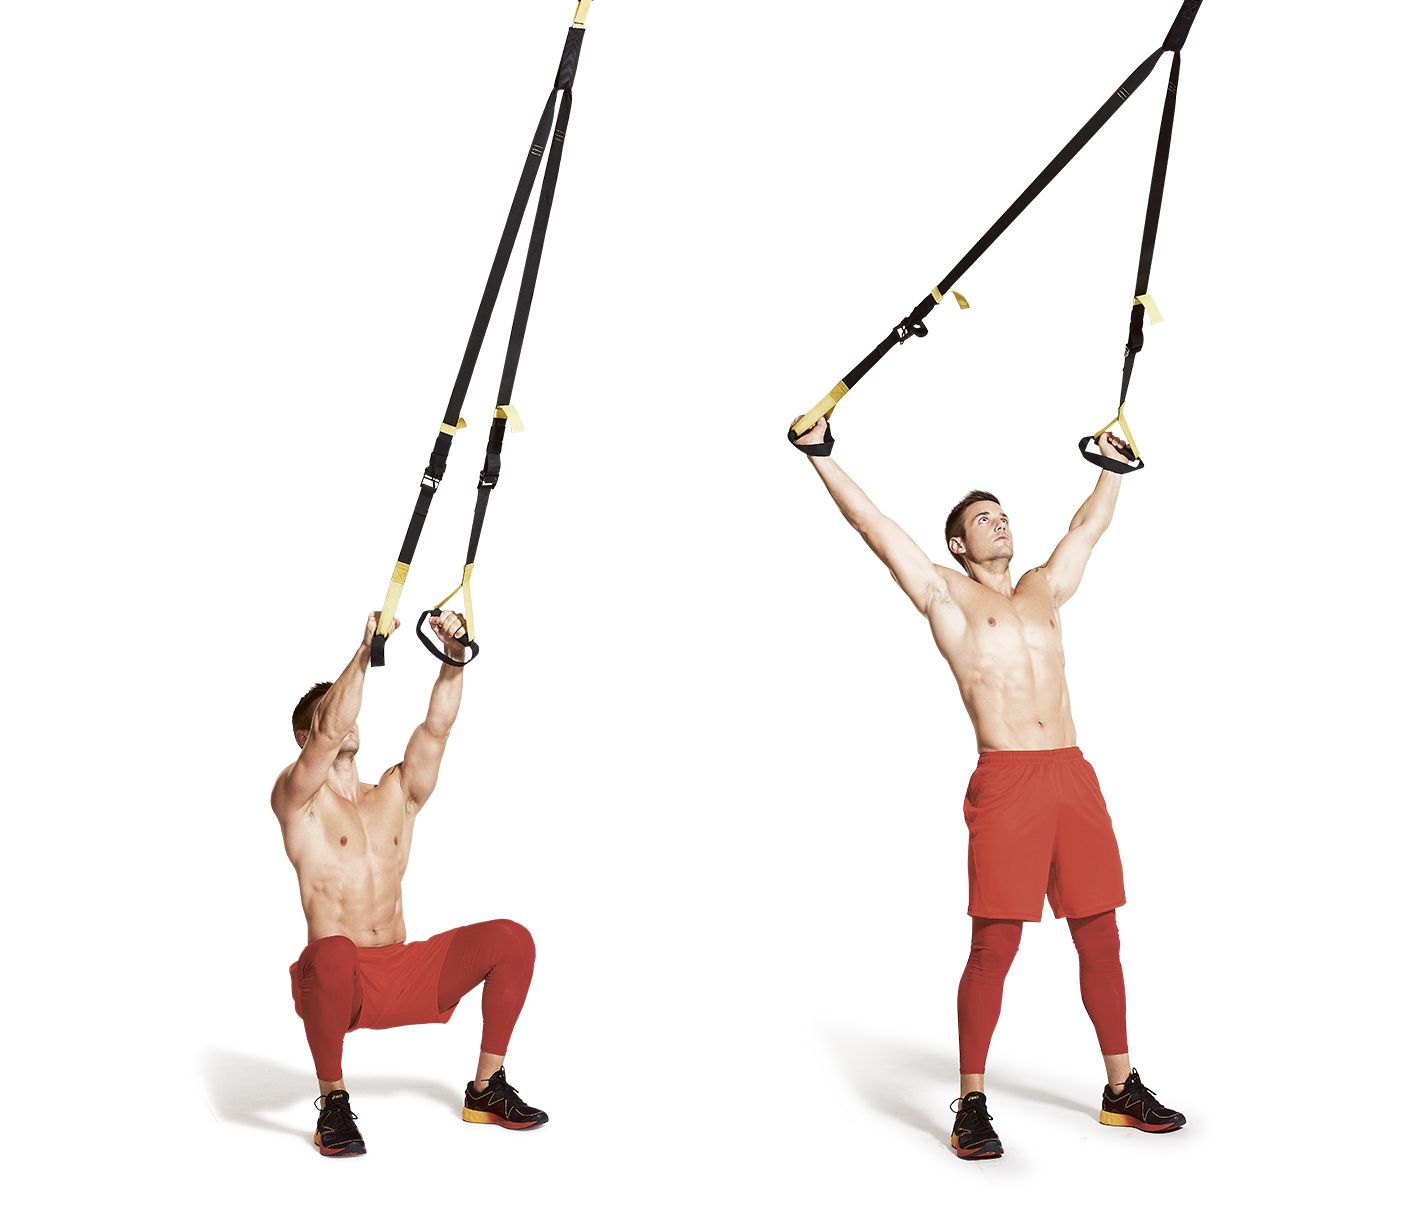 TRX Suspension Straps Squats – WorkoutLabs Exercise Guide